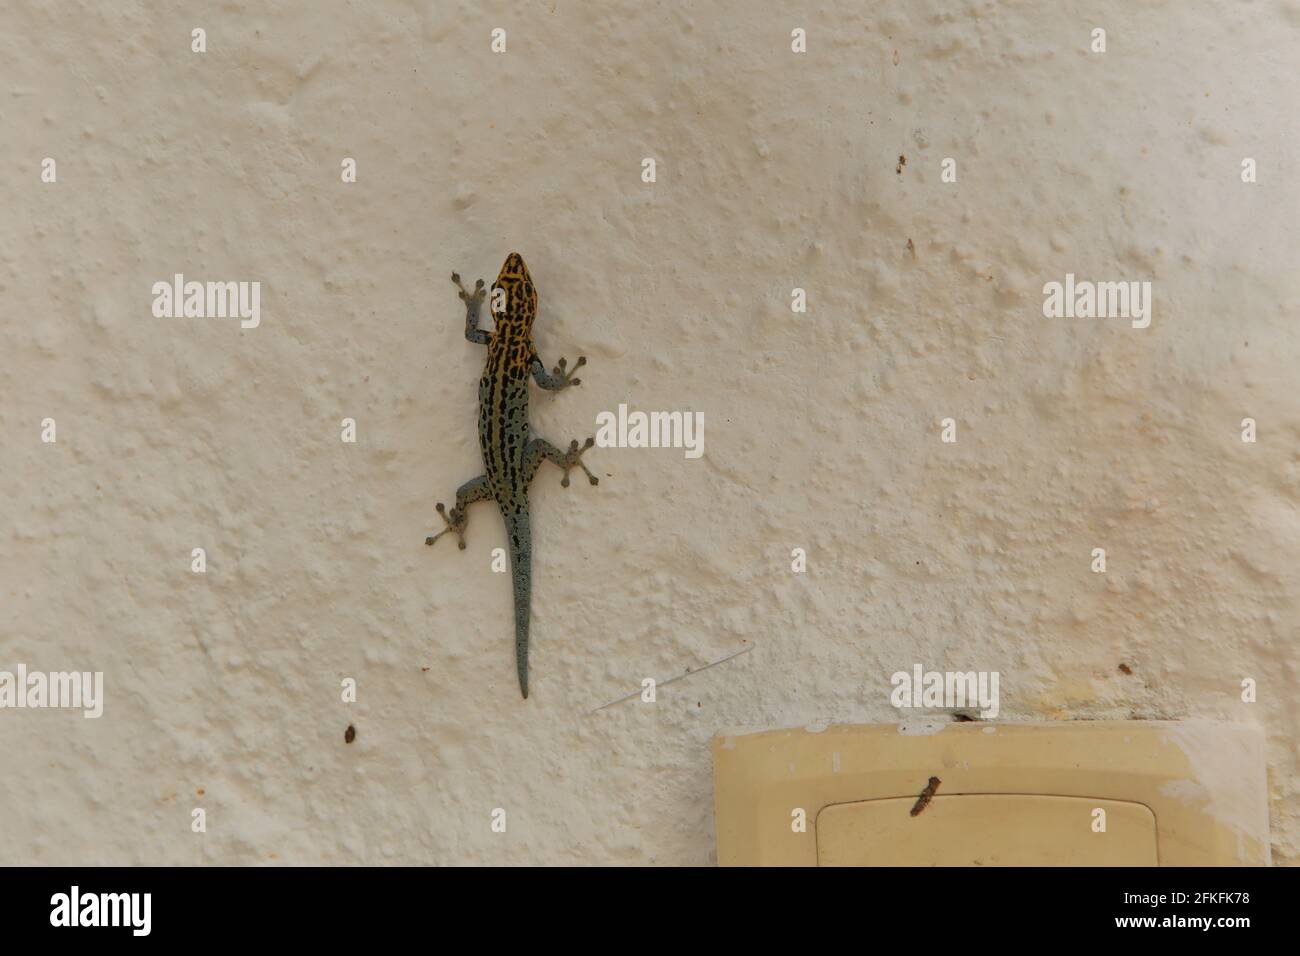 Dwarf gecko in Tanzania Stock Photo